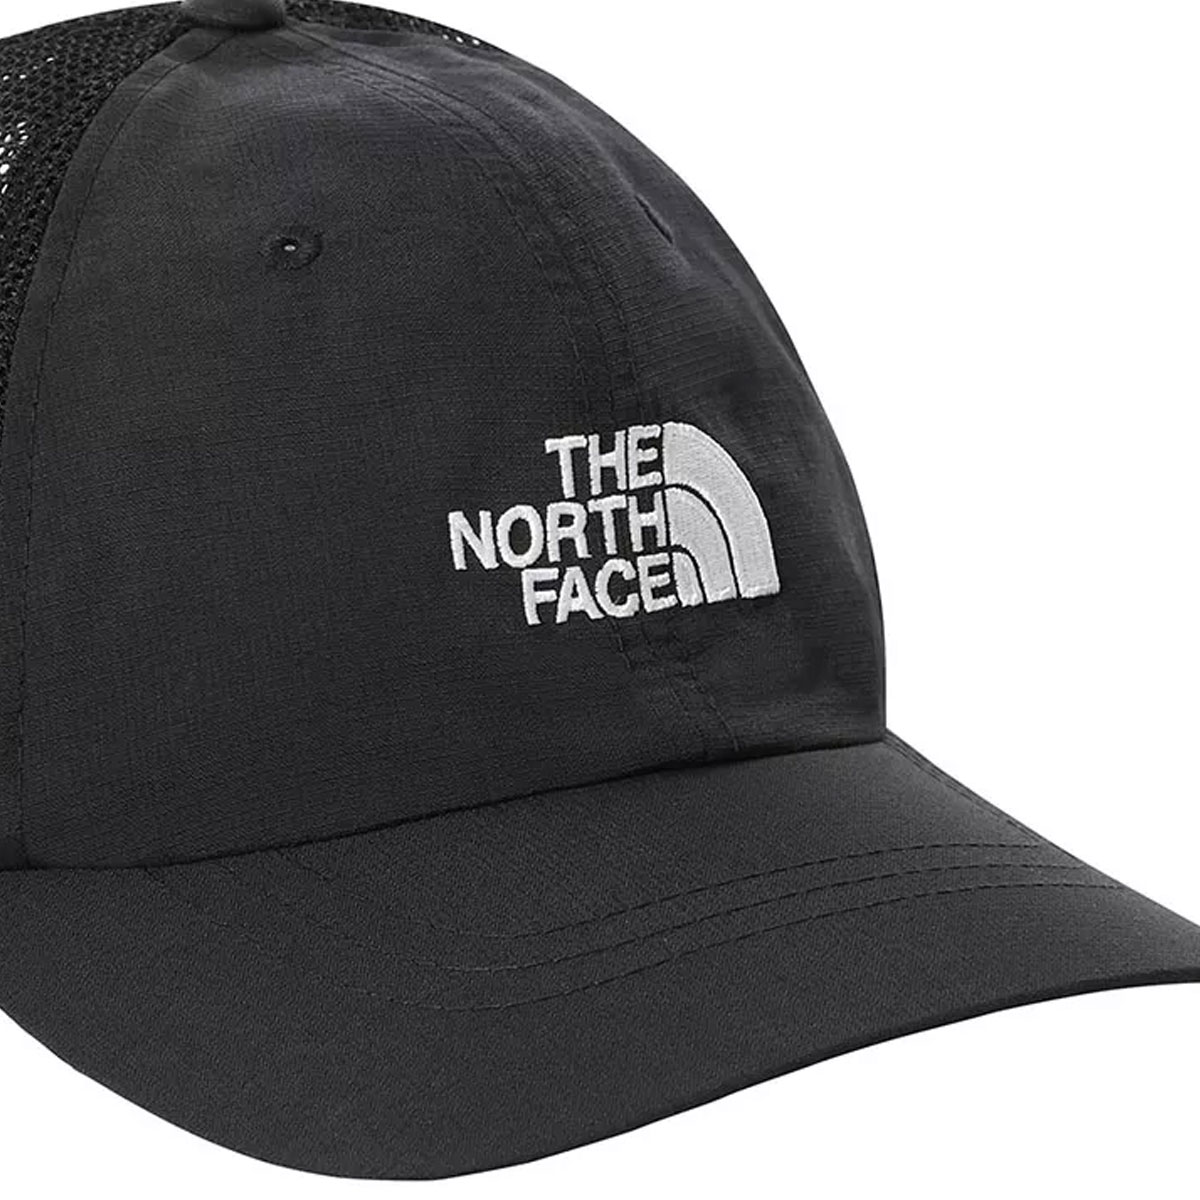 THE NORTH FACE - HORIZON MESH CAP